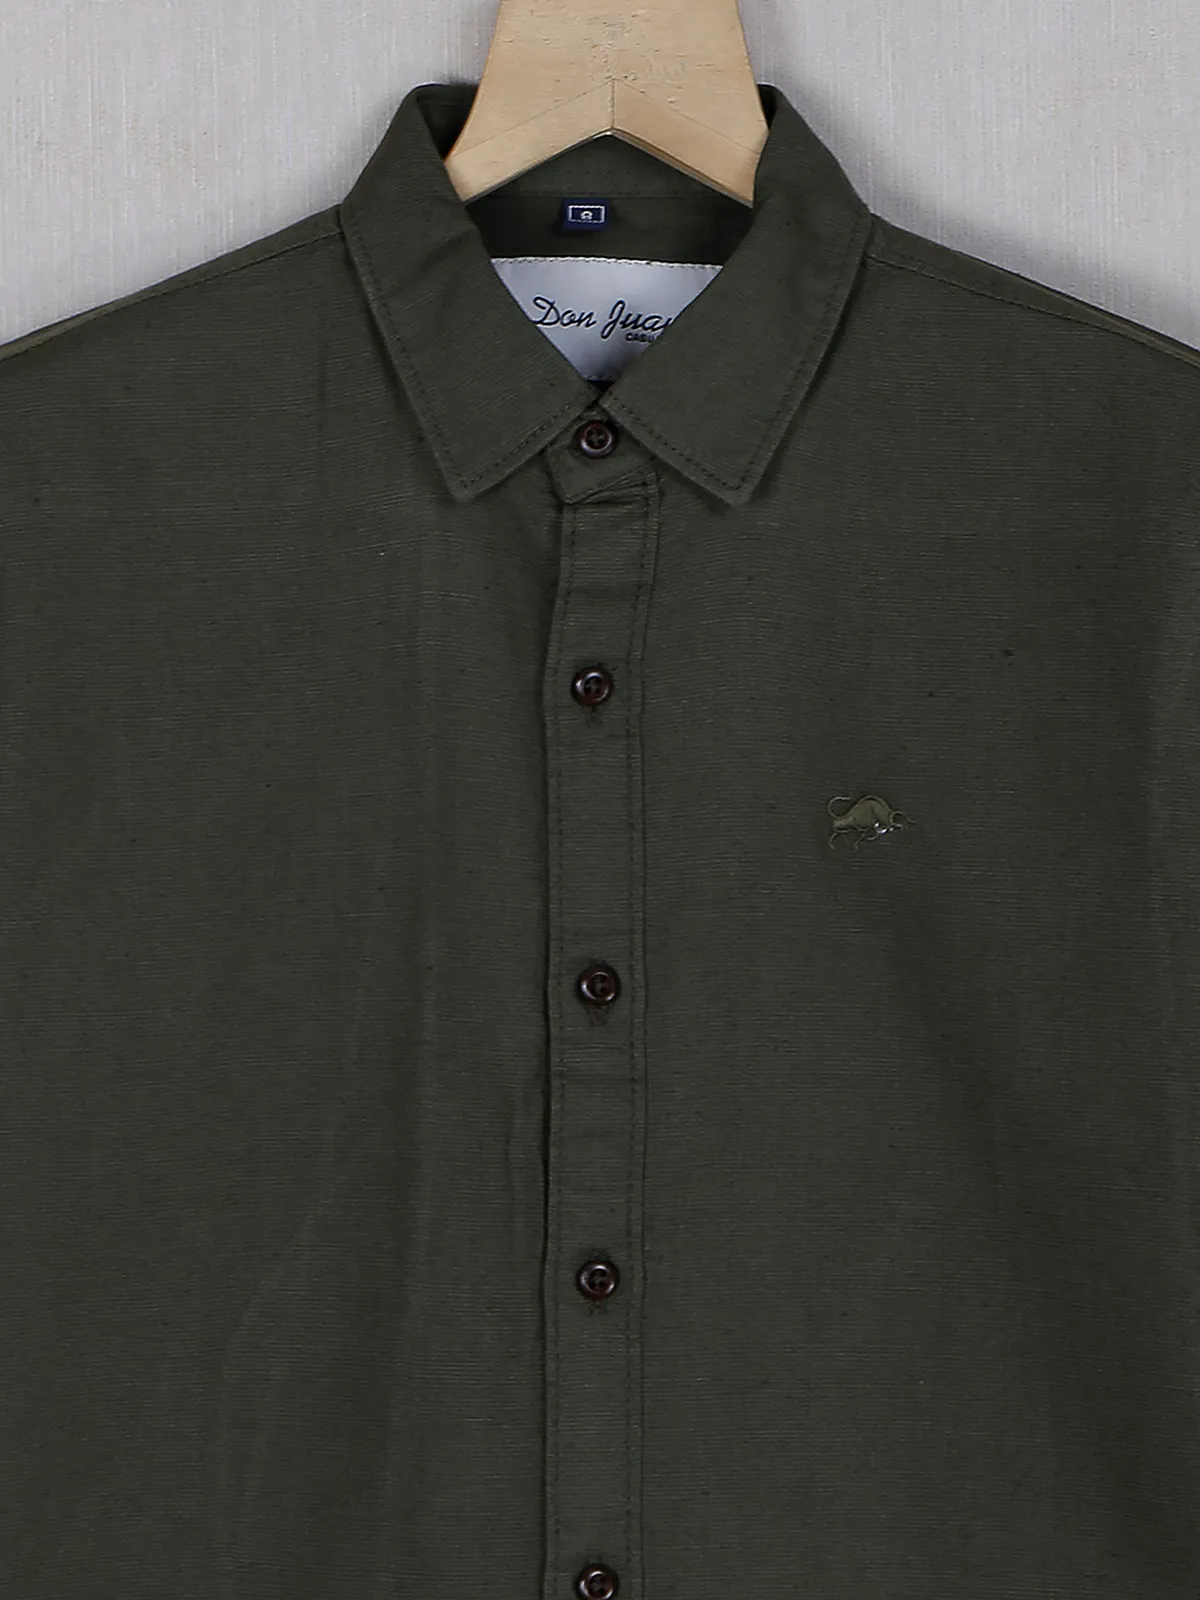 DNJS olive plain casual cotton shirt for boys